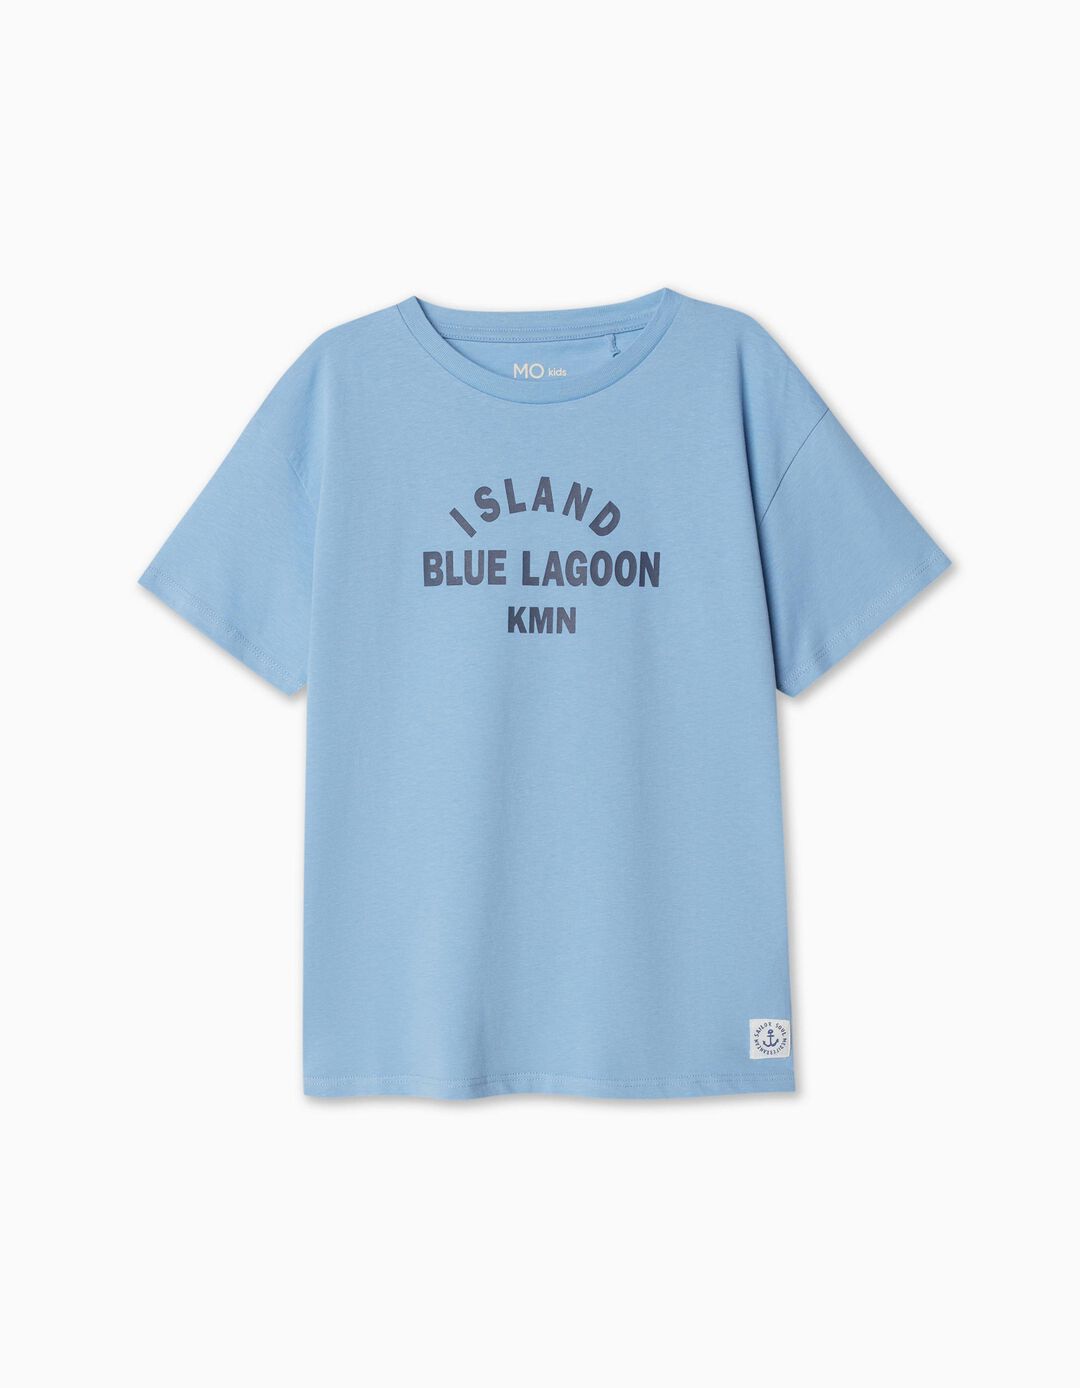 T-shirt Estampado, Menino, Azul Claro